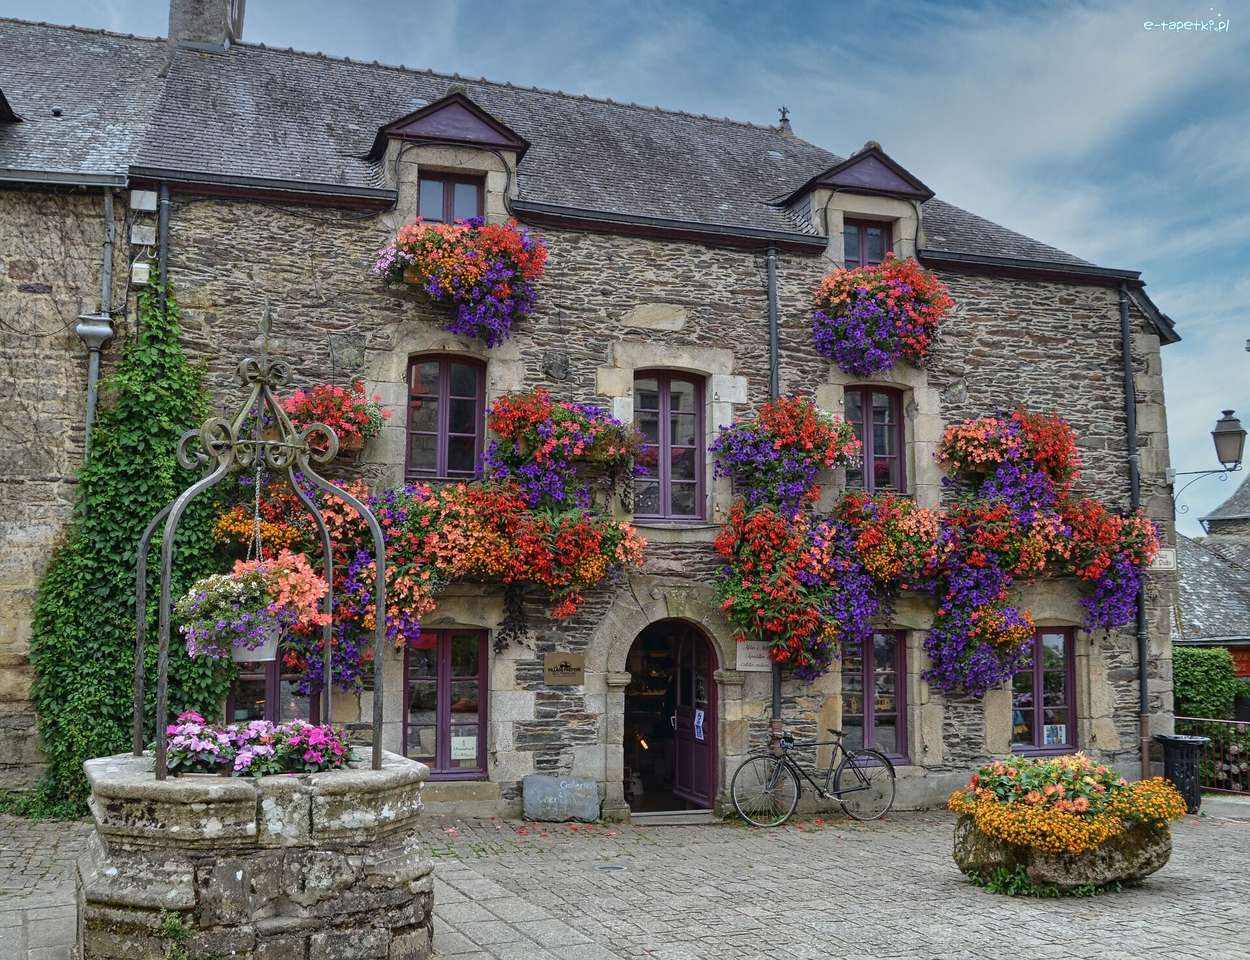 Rochefort en Terre, nájemní dům online puzzle